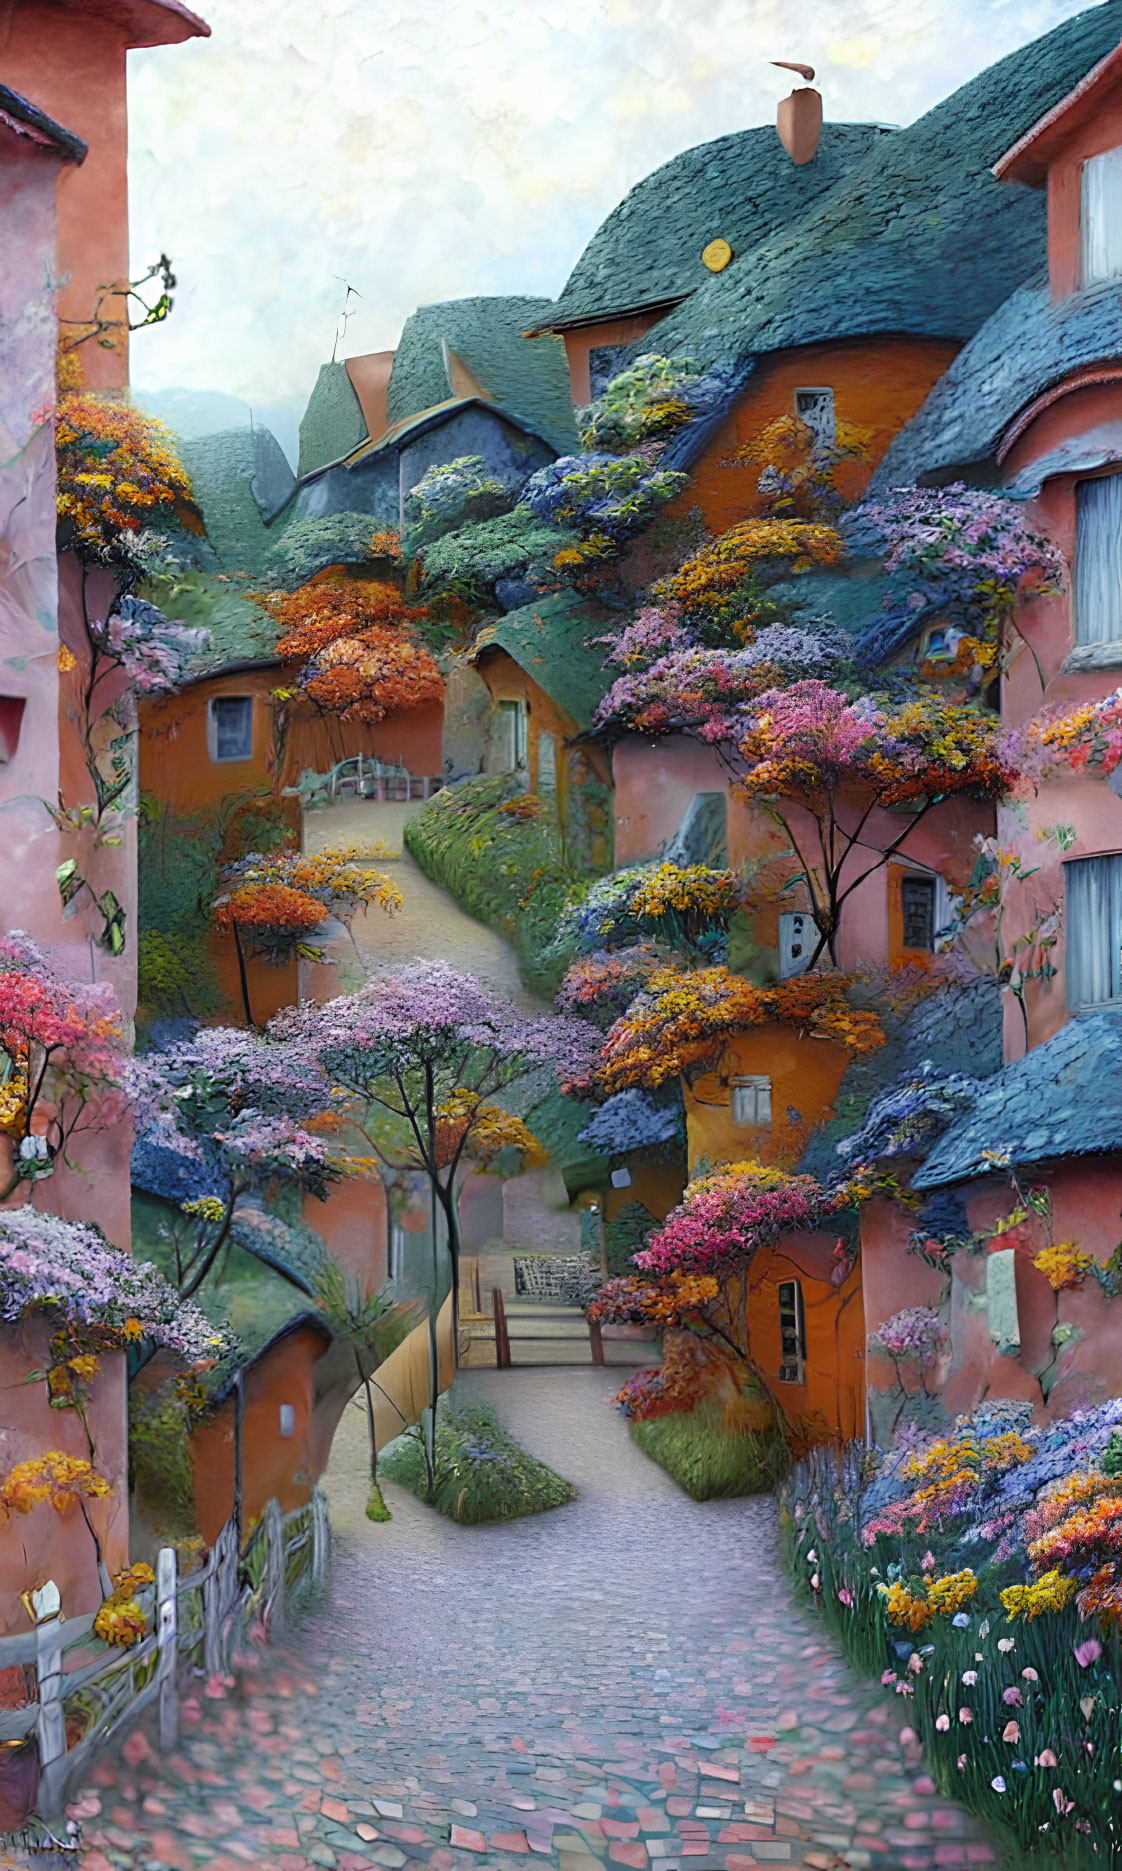 "Village in Bloom" - Unreal/AI